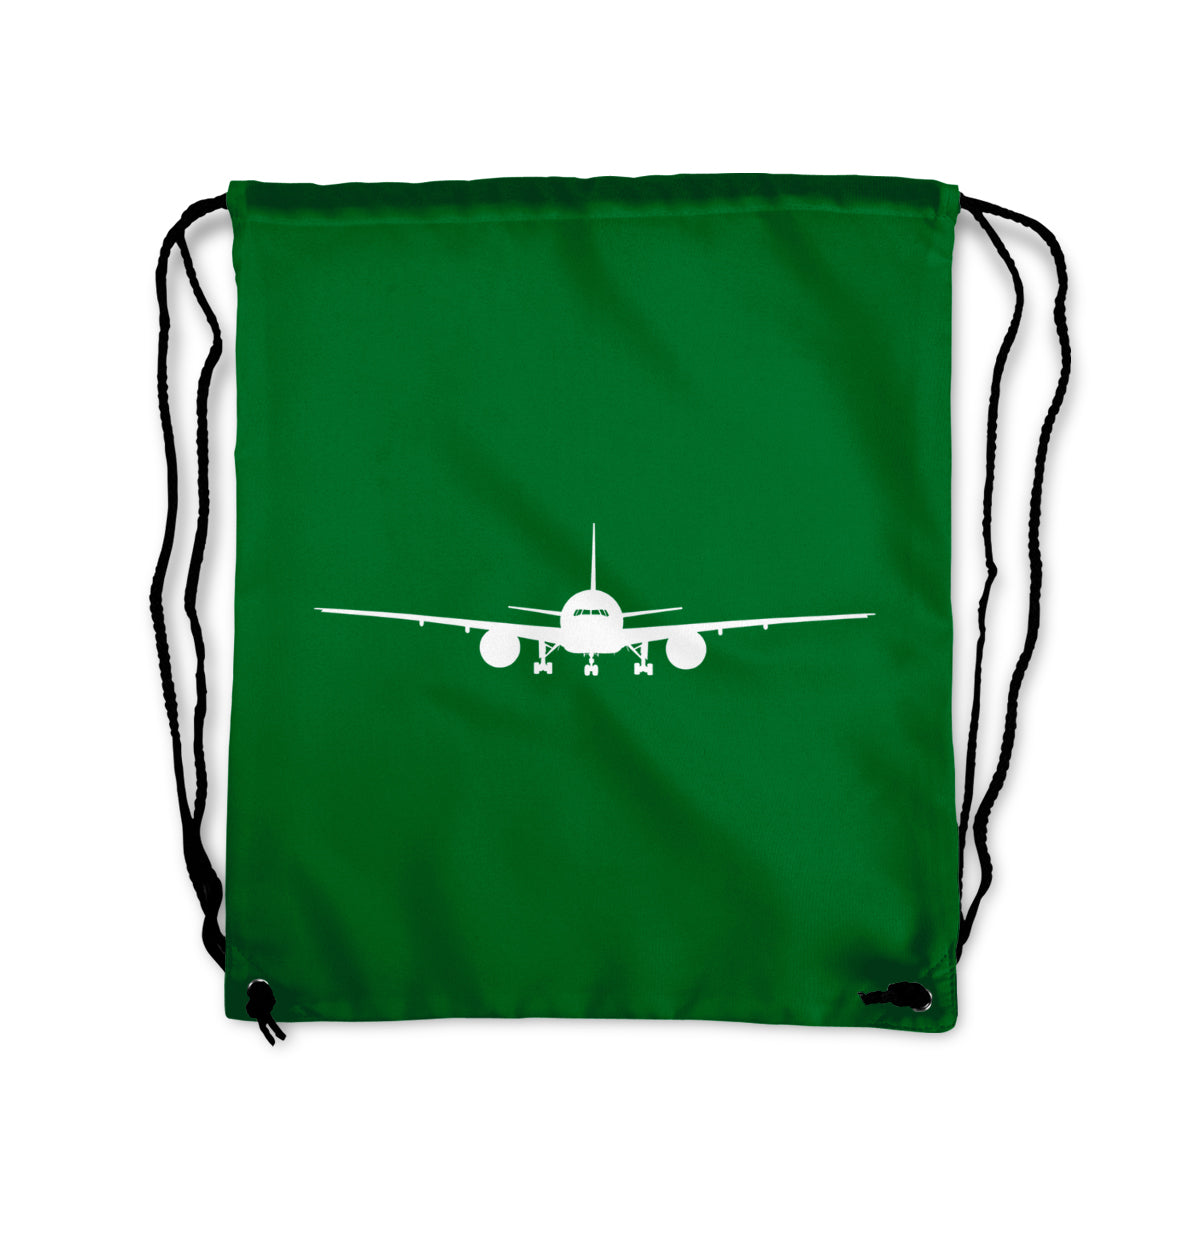 Boeing 777 Silhouette Designed Drawstring Bags